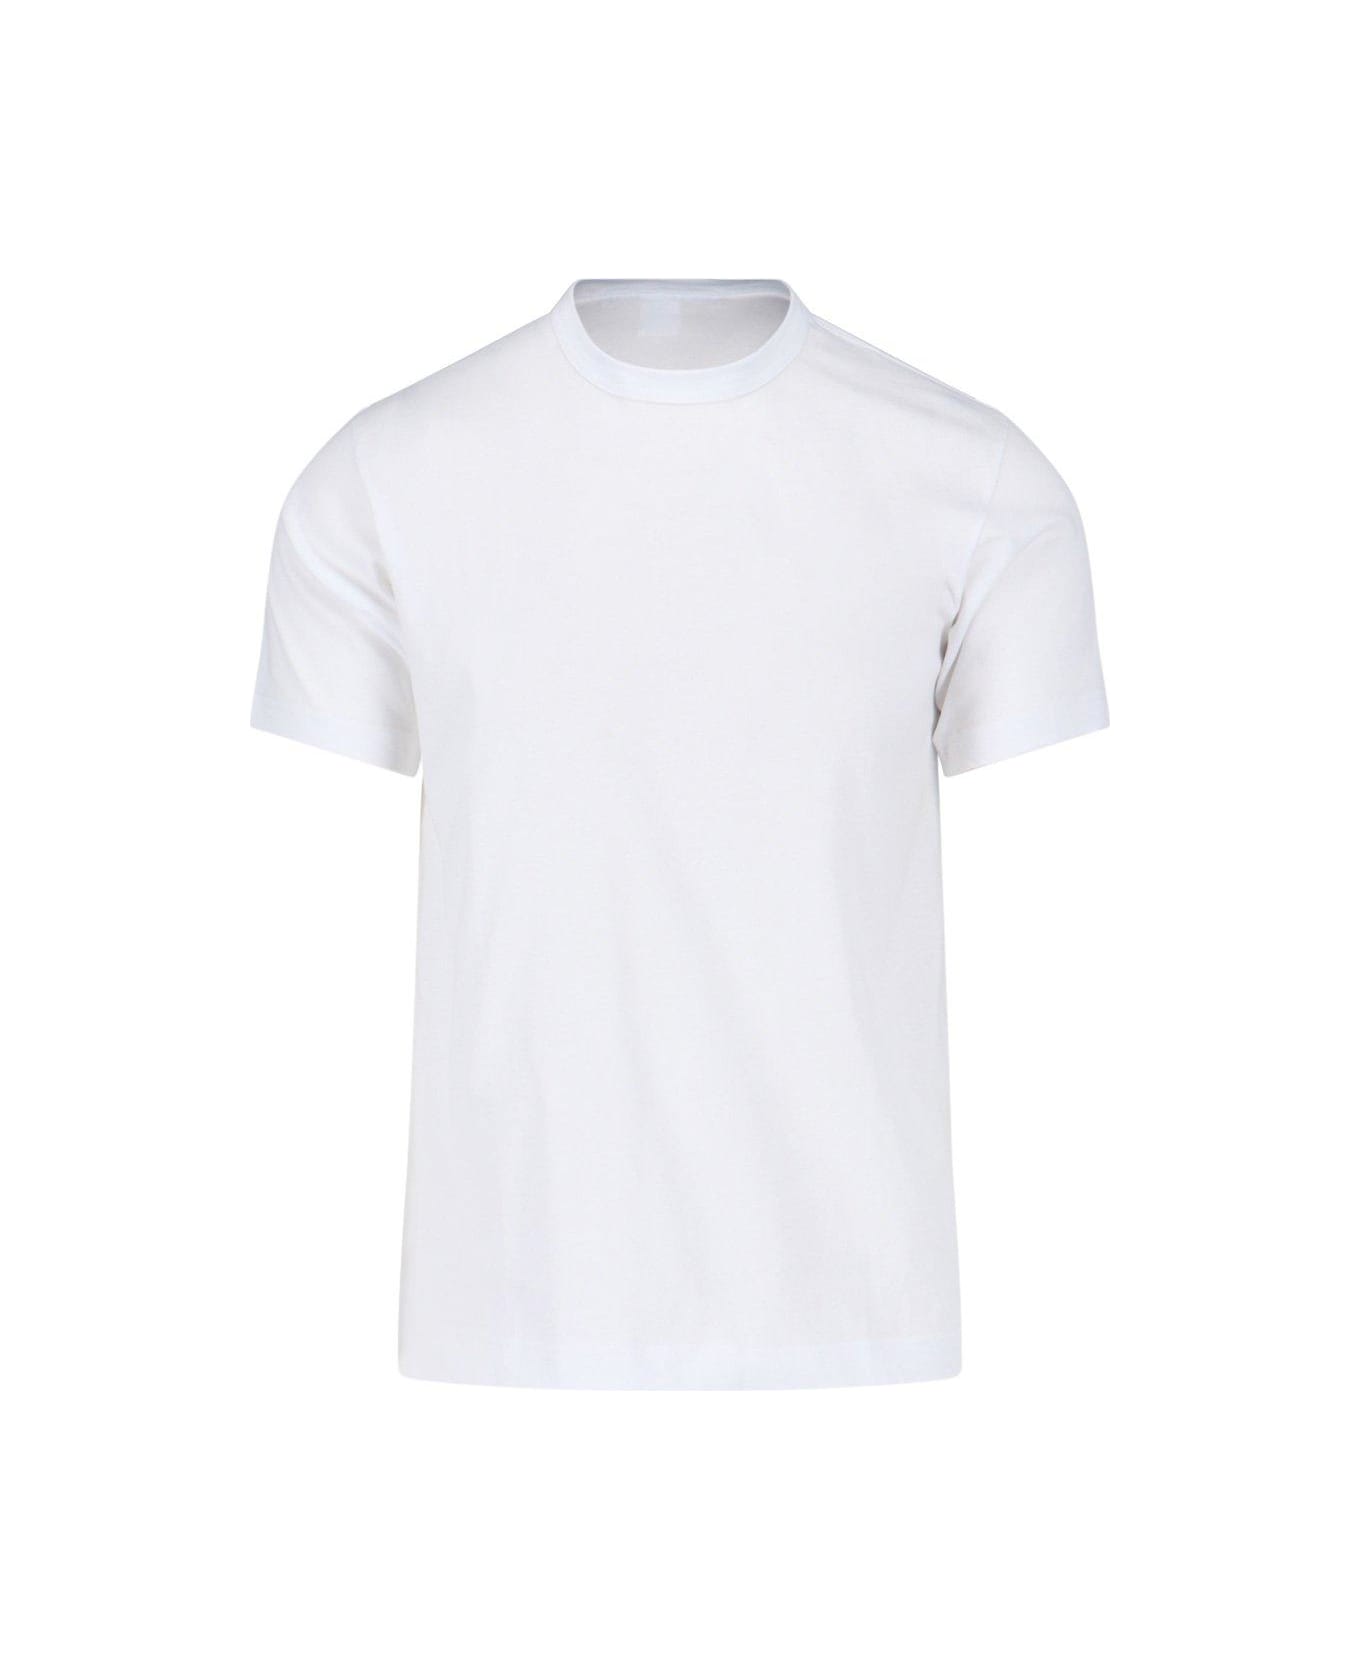 Comme des Garçons Shirt Basic T-shirt - White